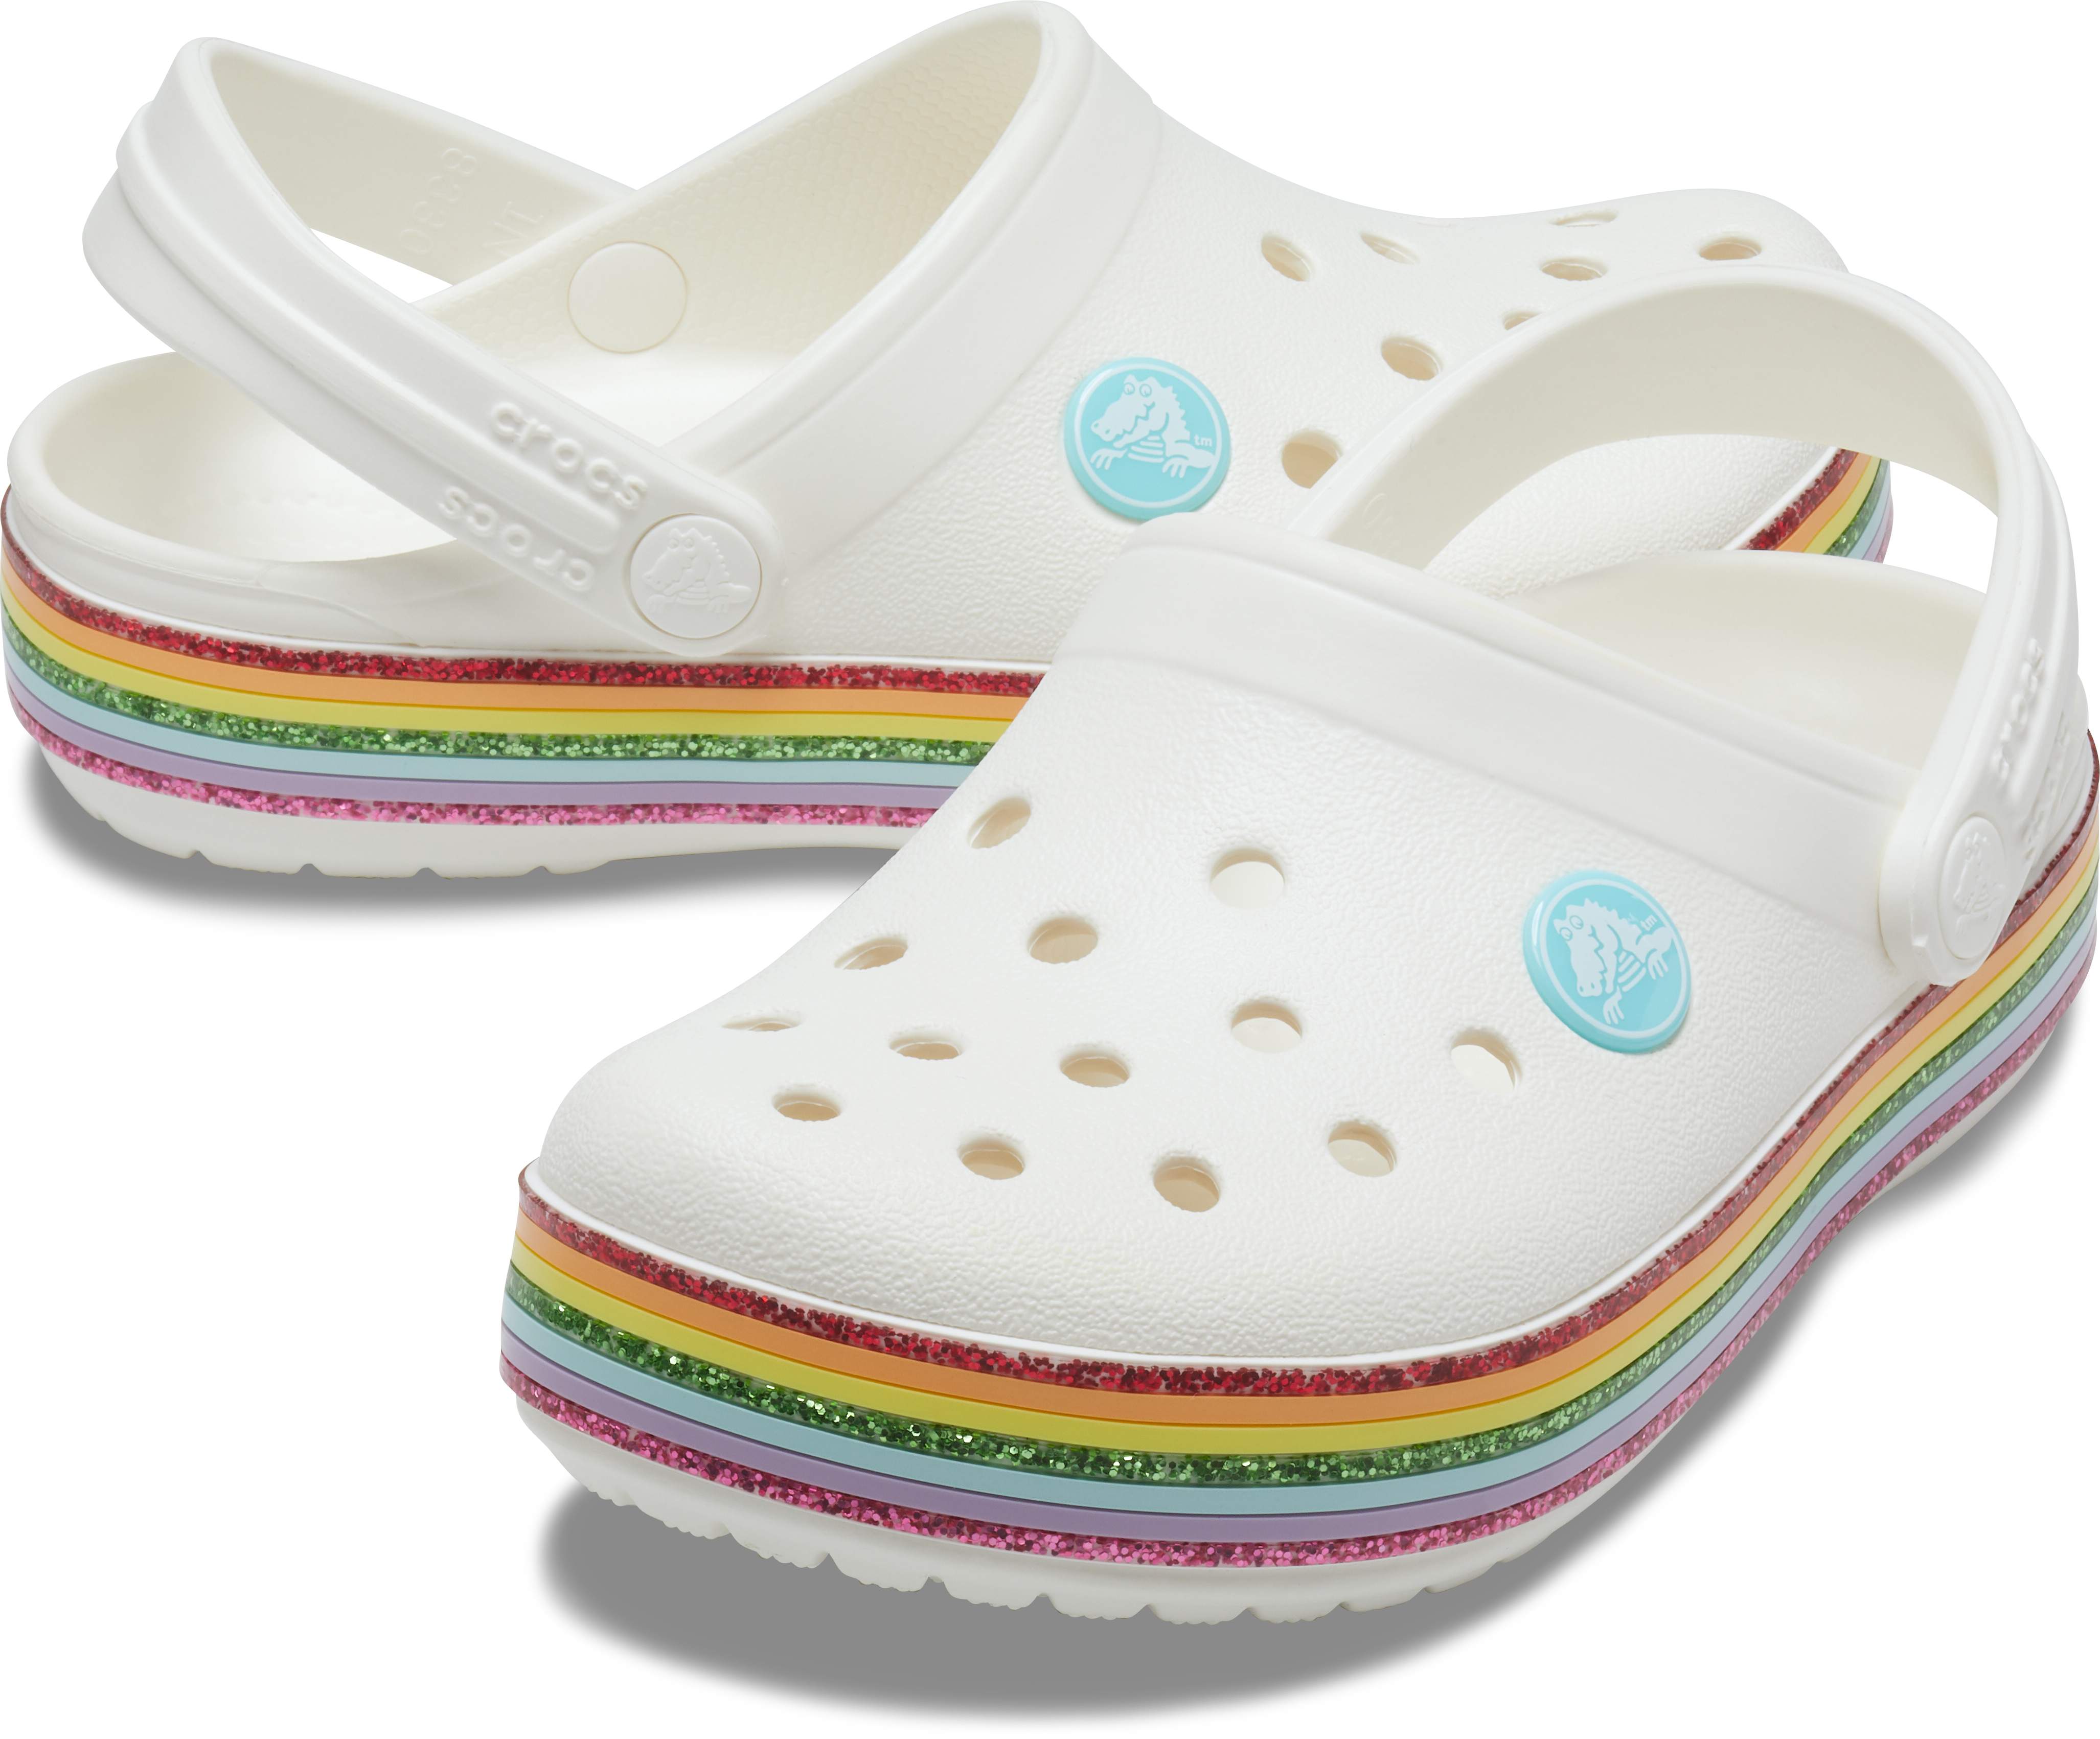 rainbow band crocs